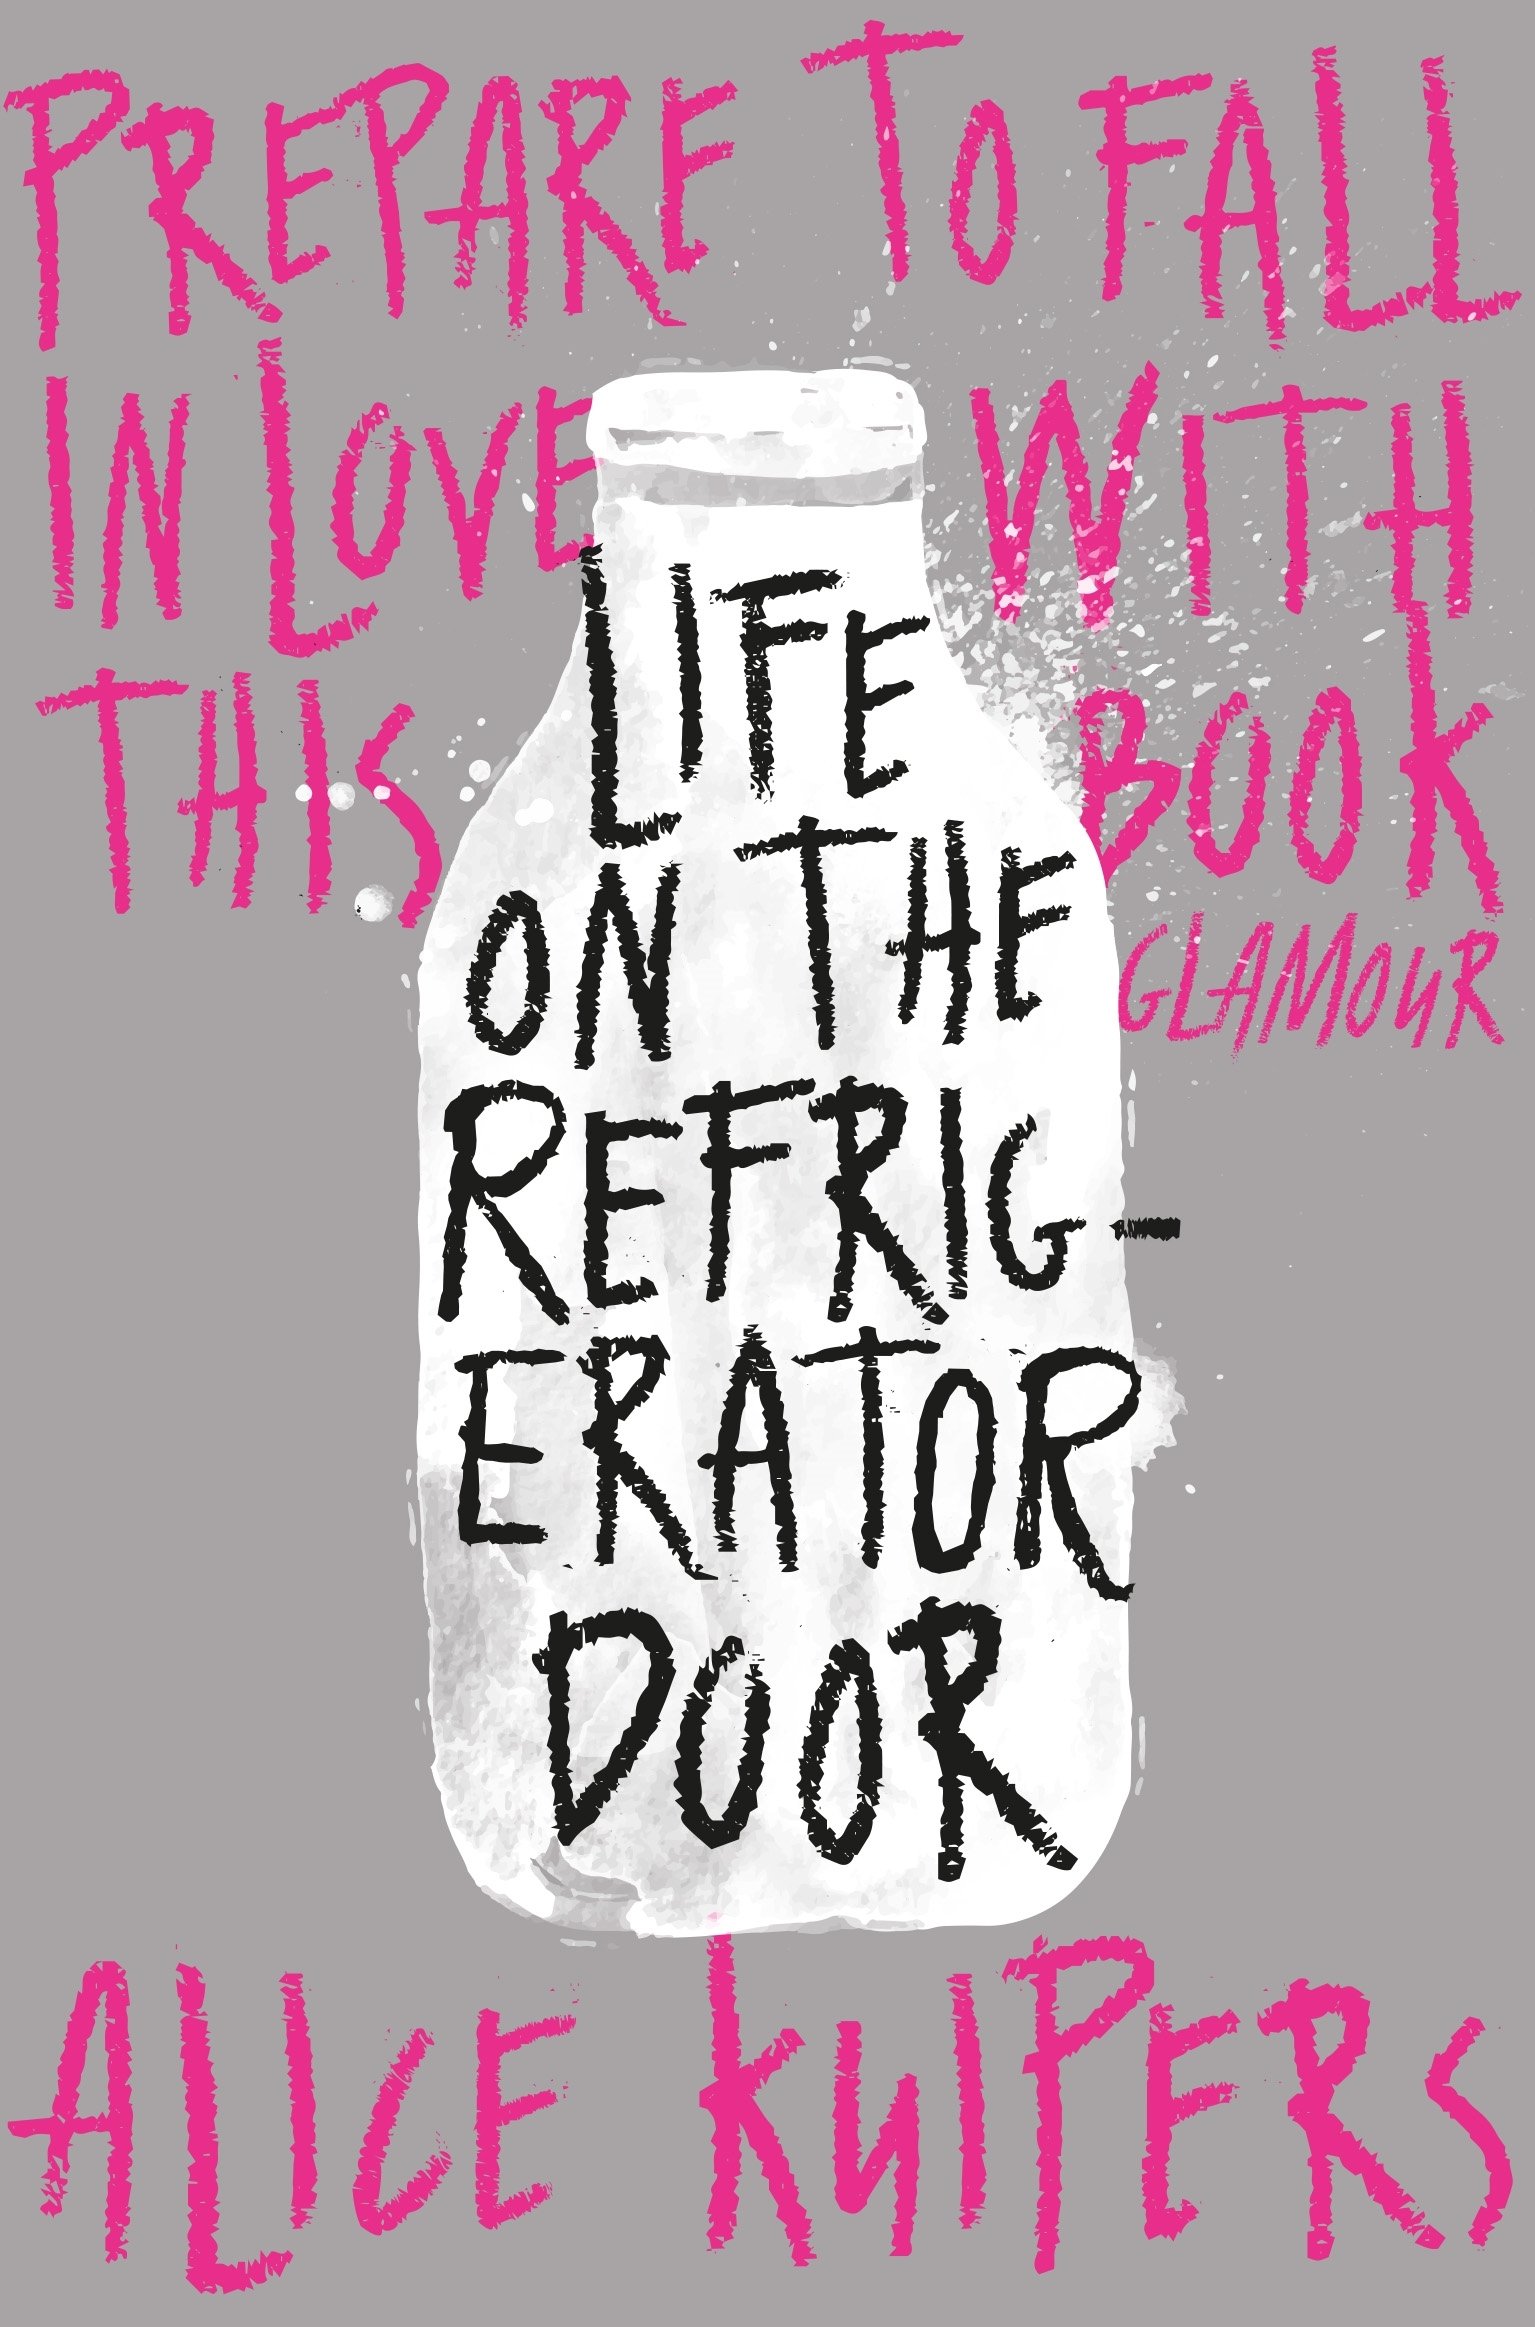 Life on the Refrigerator Door